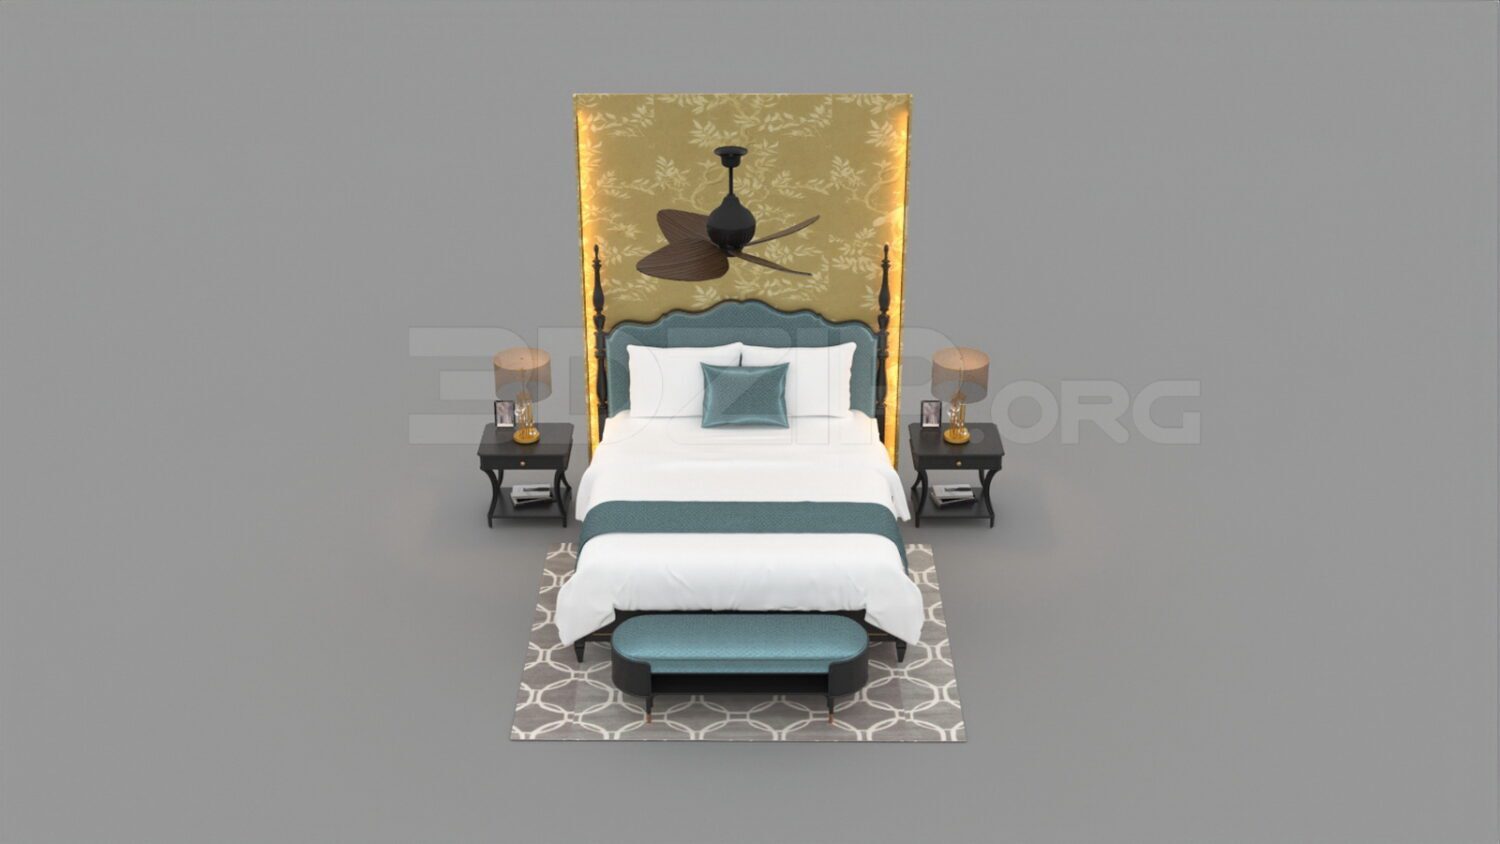 3557. Free 3D Bed Model Download